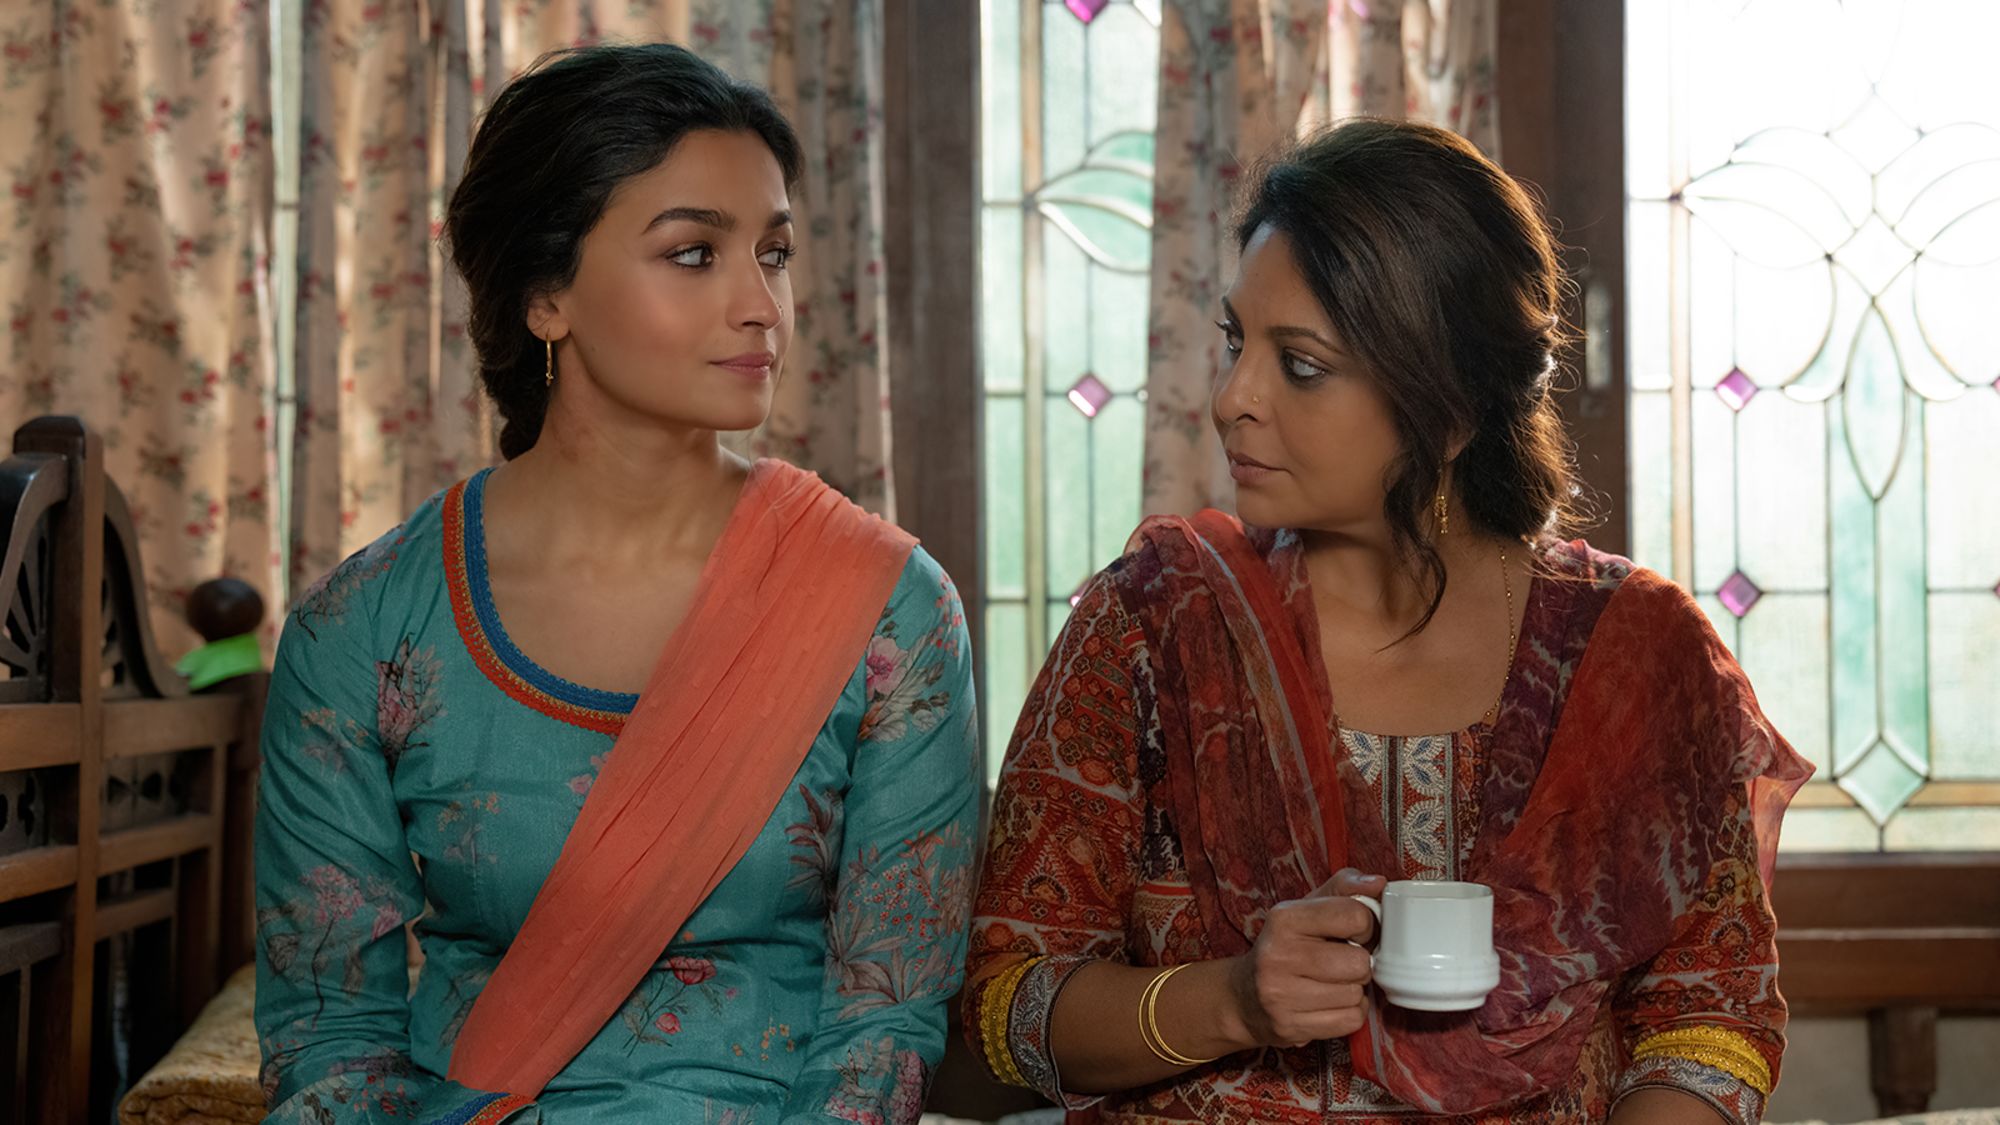 Only Alia Bhatt Sex - Indian star Alia Bhatt tackles domestic violence in Netflix movie  'Darlings' | CNN